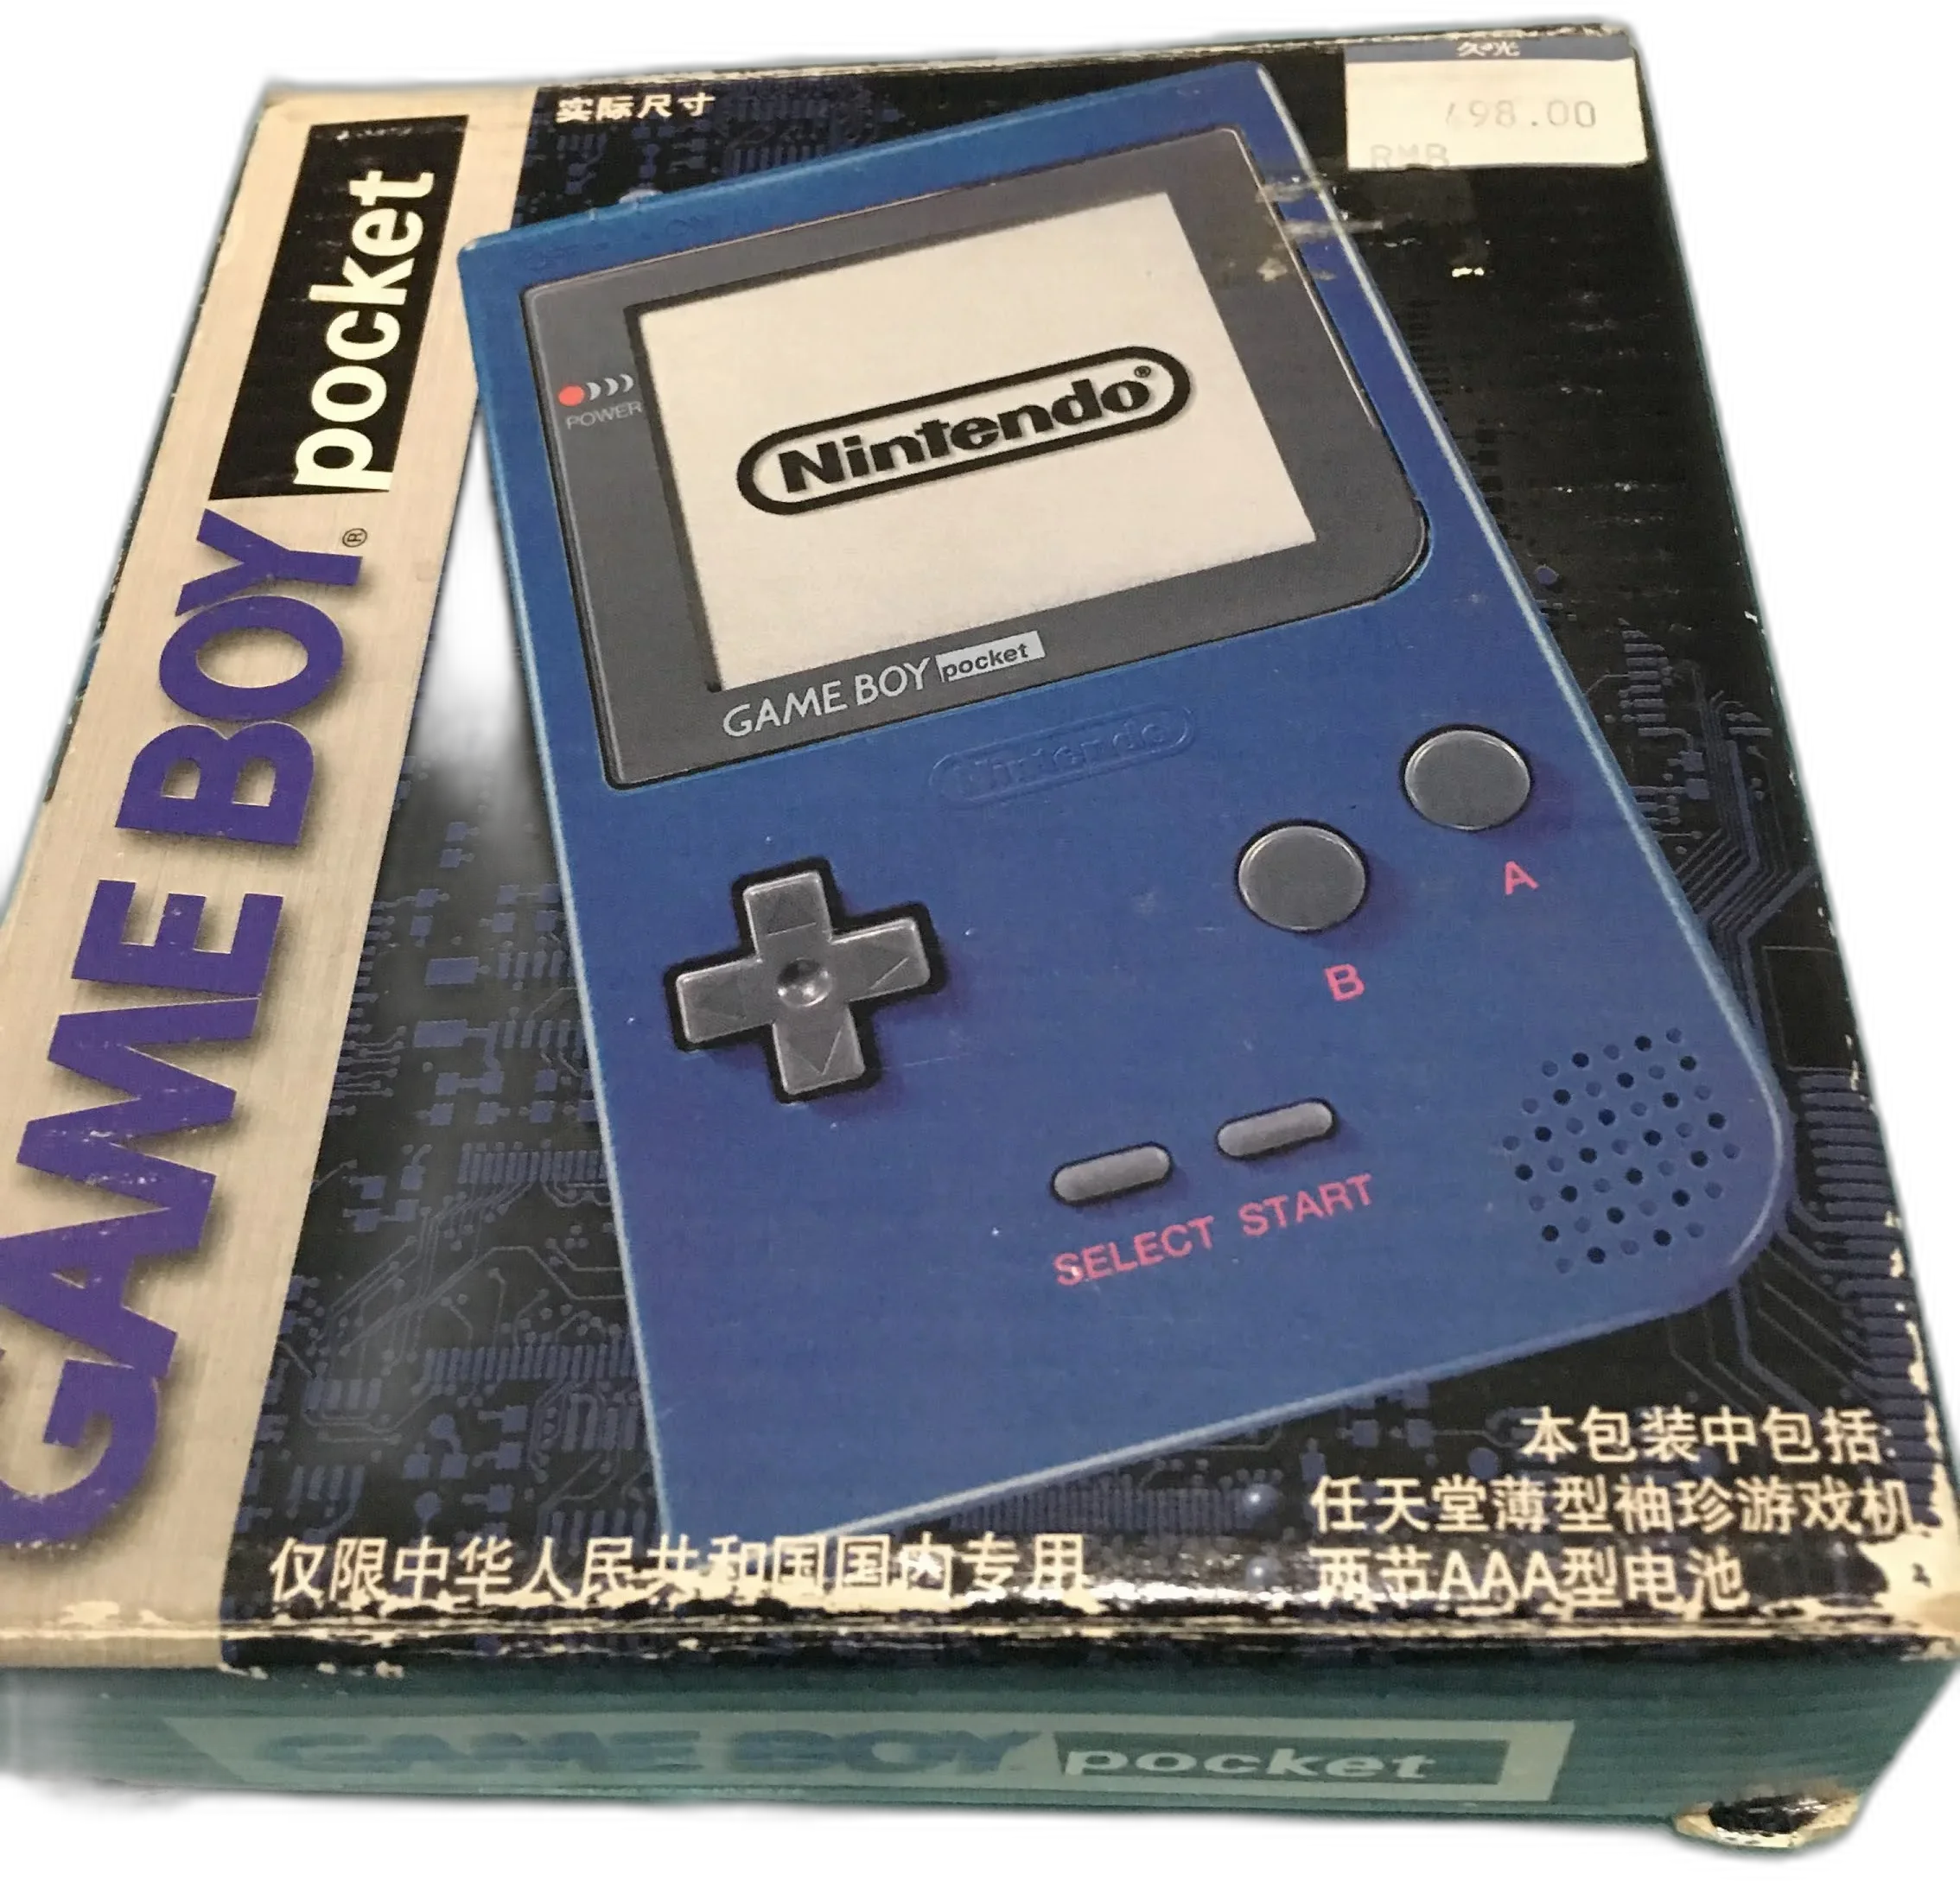  Nintendo Game Boy Pocket Blue Console [CN]